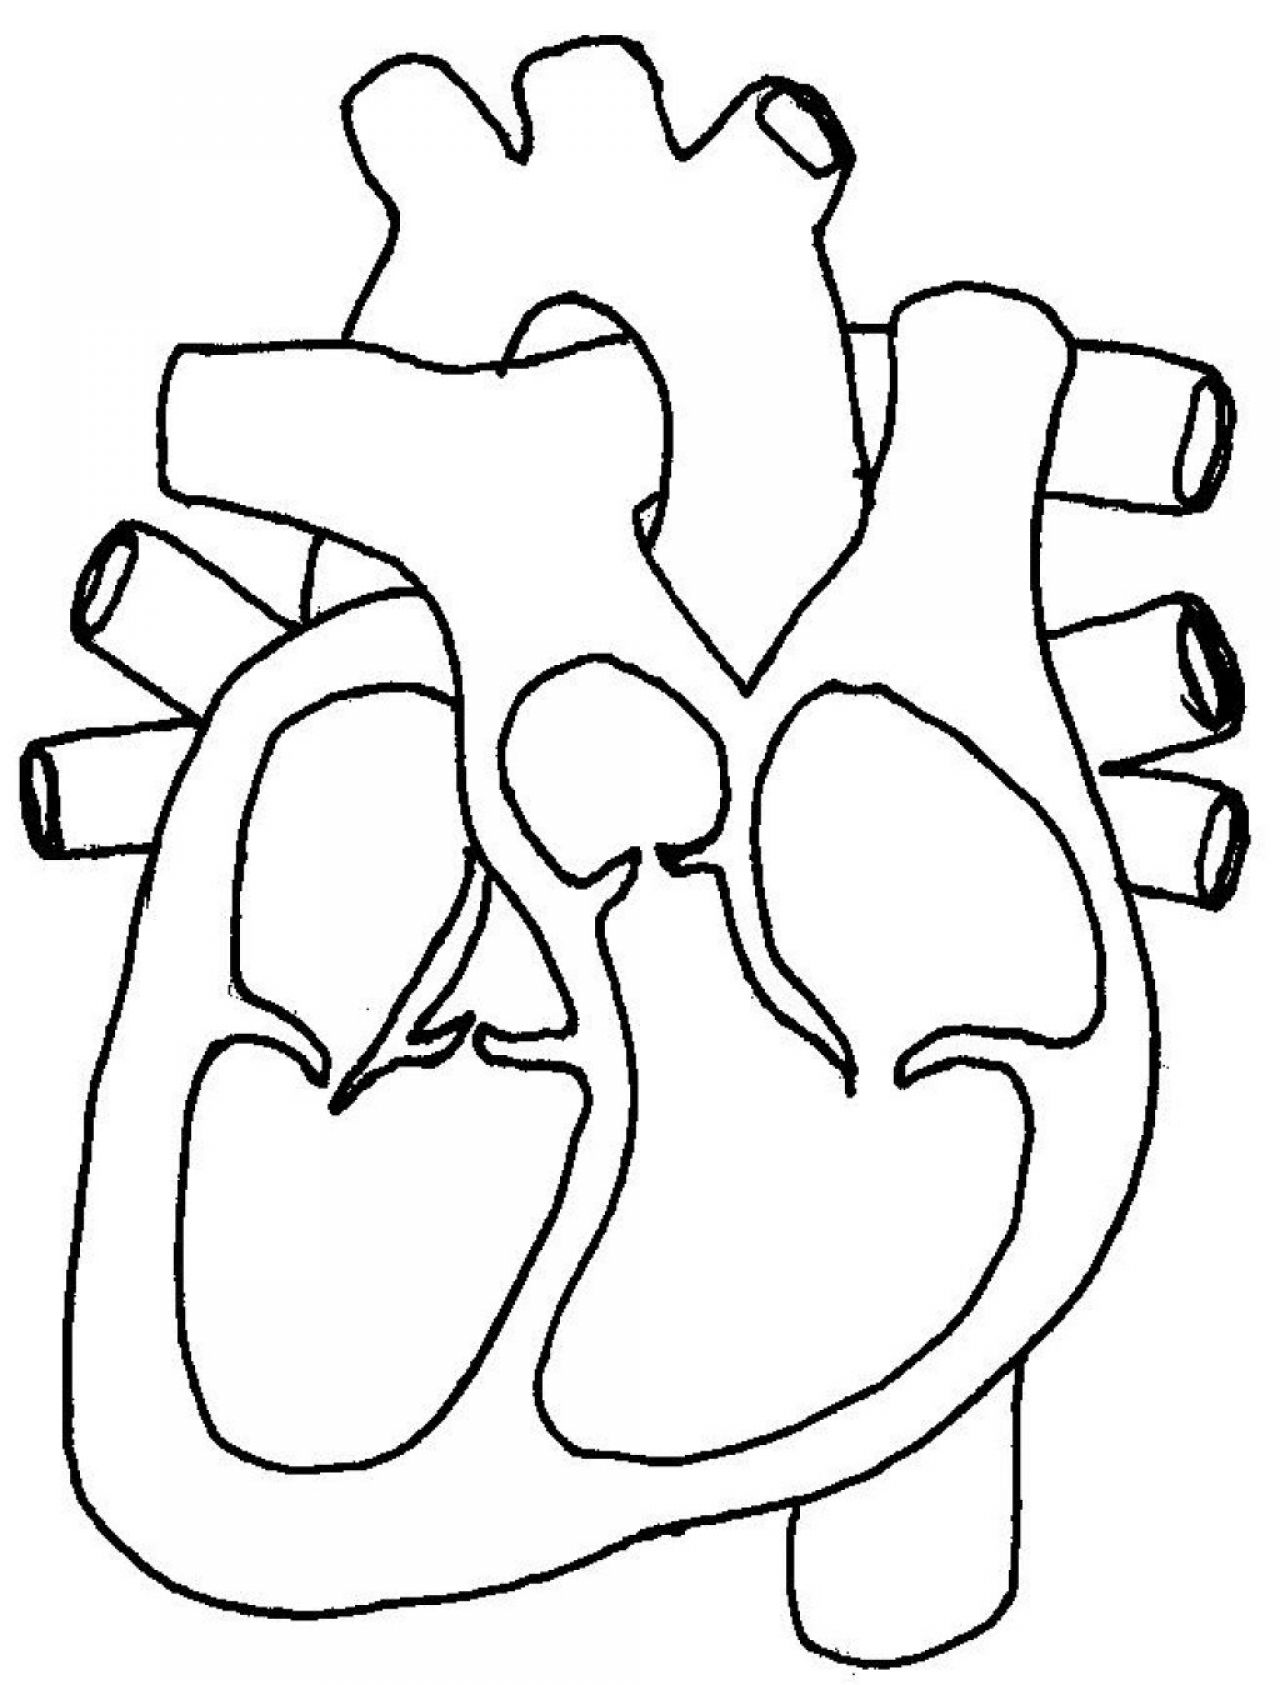 Free Blank Heart Diagram Download Free Clip Art Free